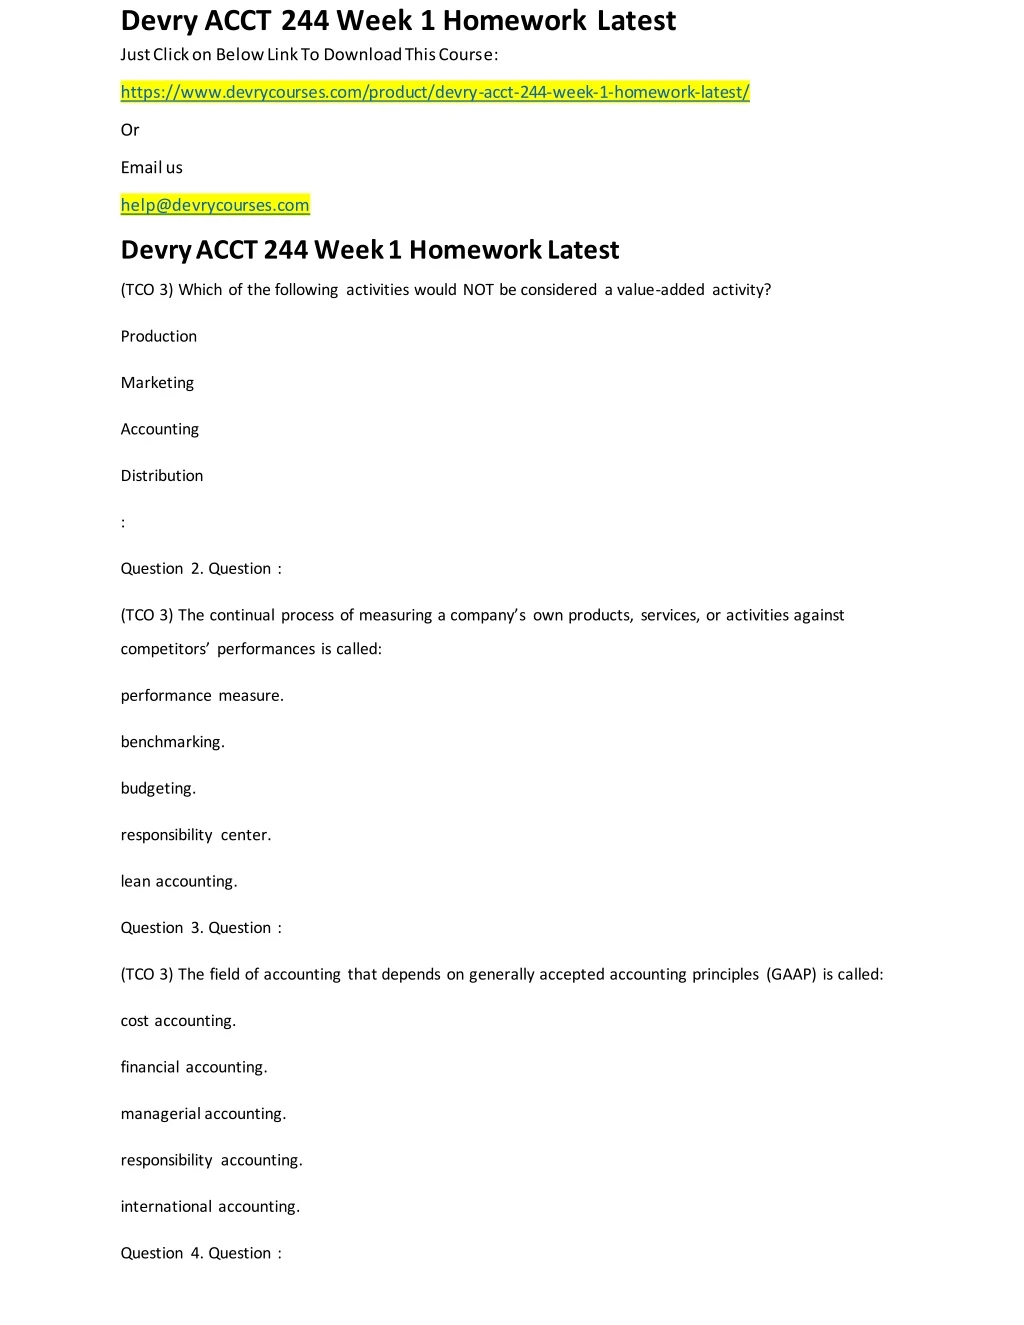 devry acct 244 week 1 homework latest just click